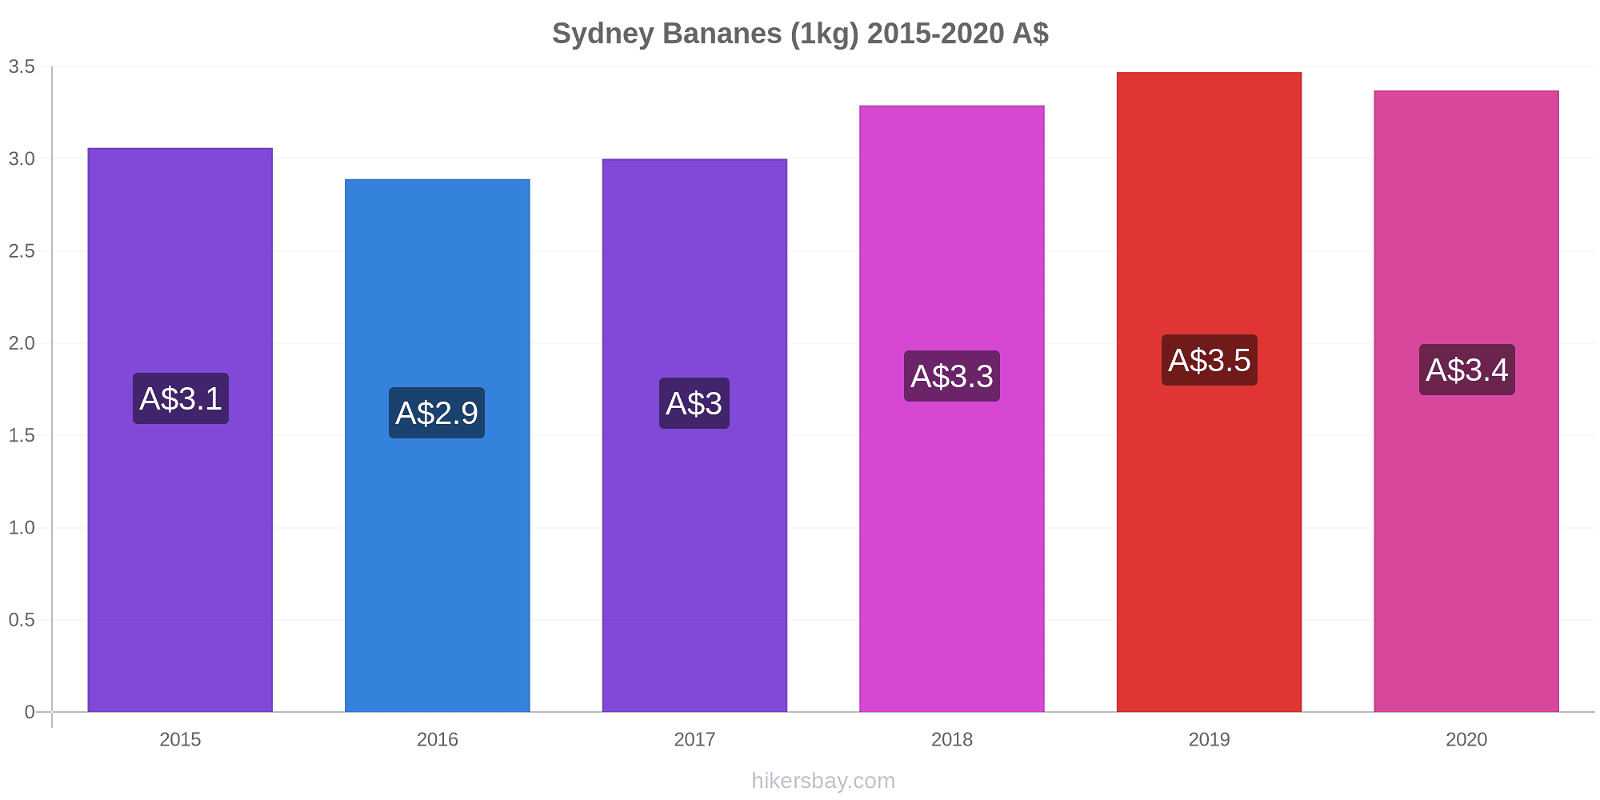 Sydney changements de prix Bananes (1kg) hikersbay.com